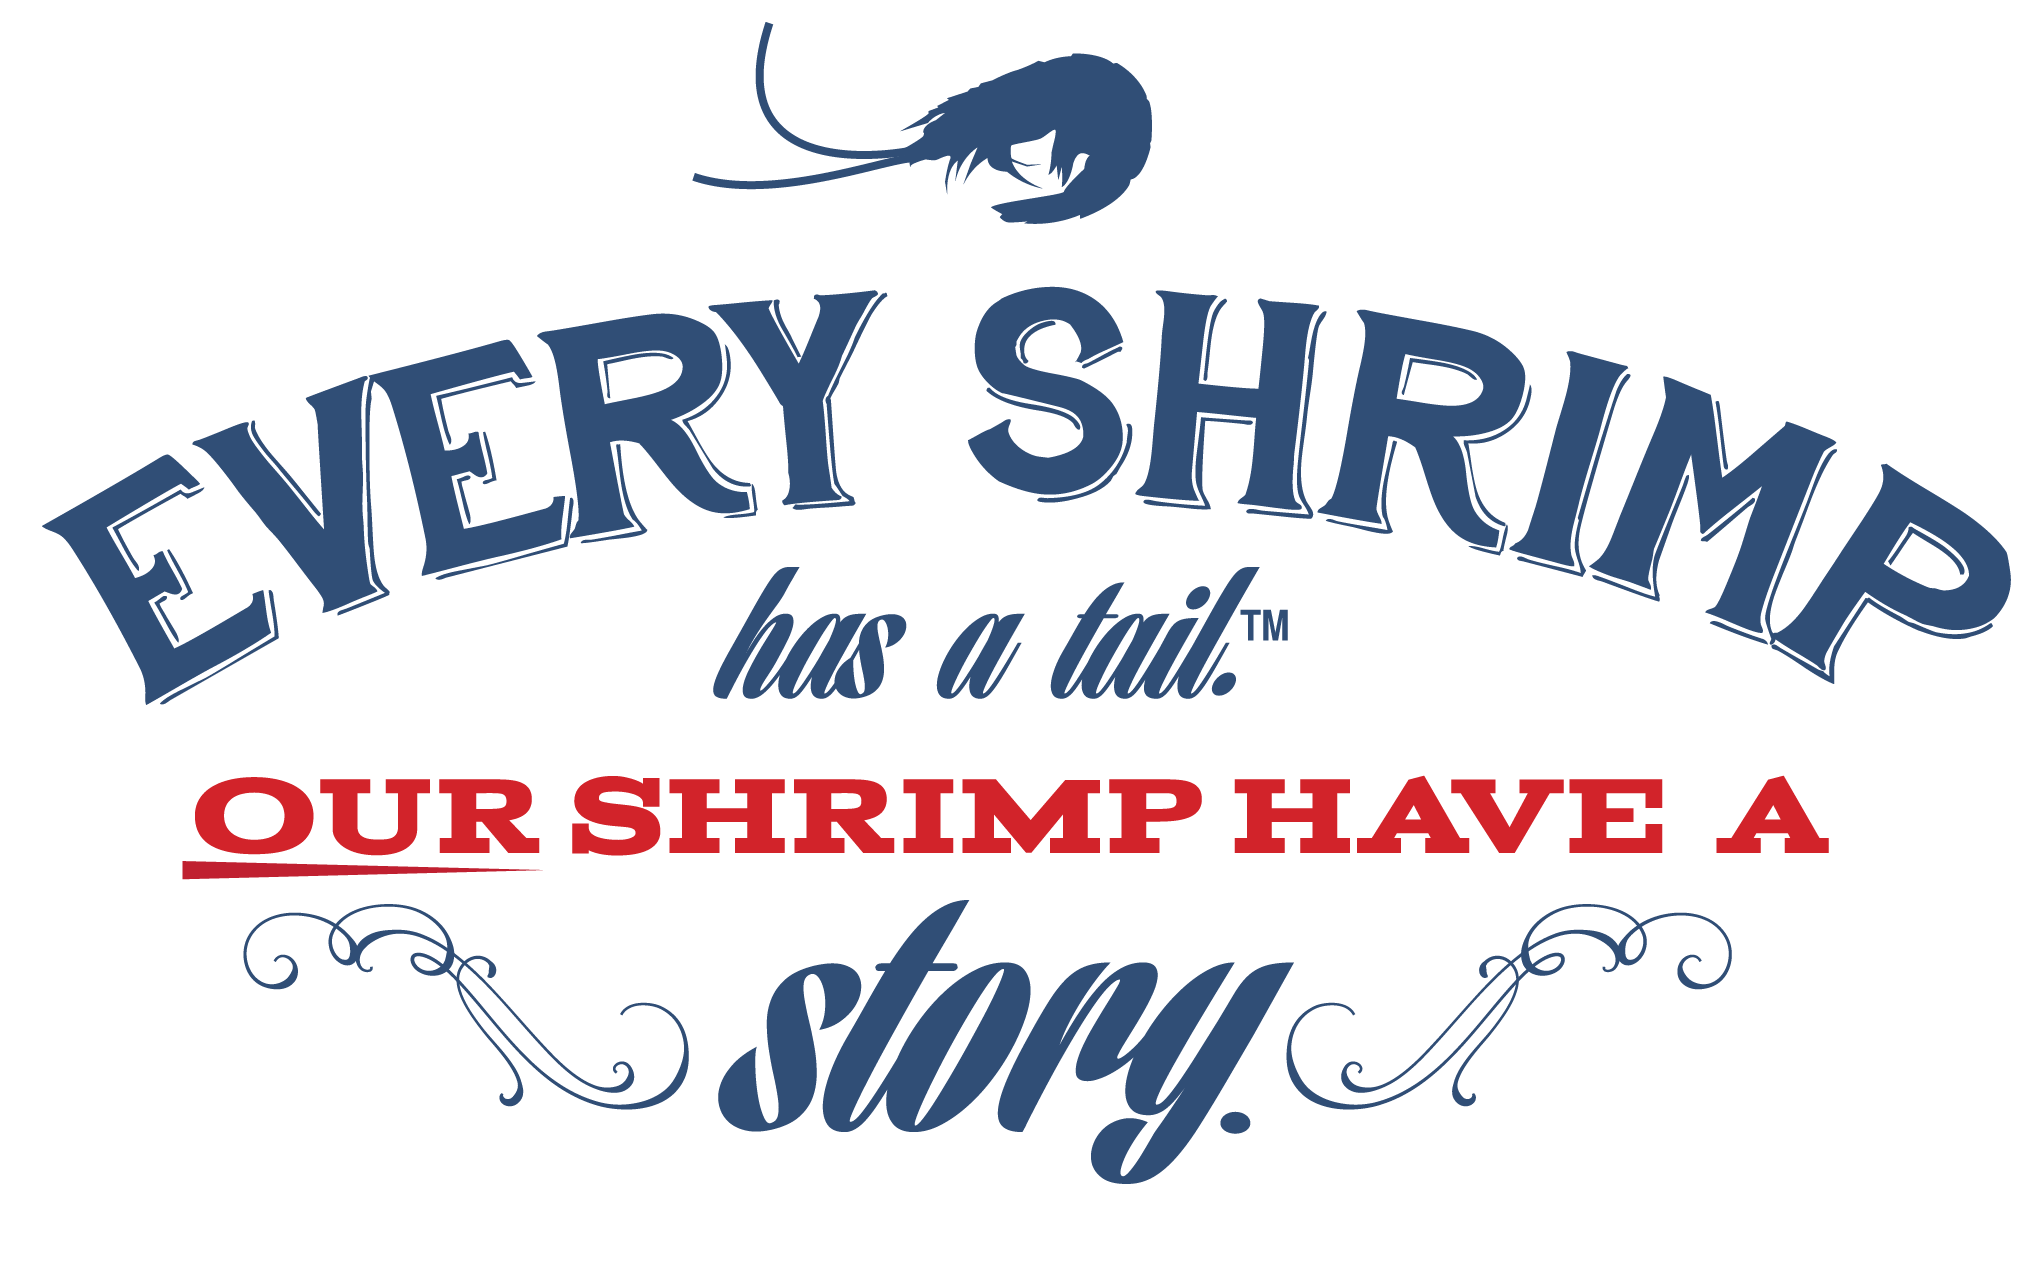 Every shrimp has a tale. Our shrimp have a story.